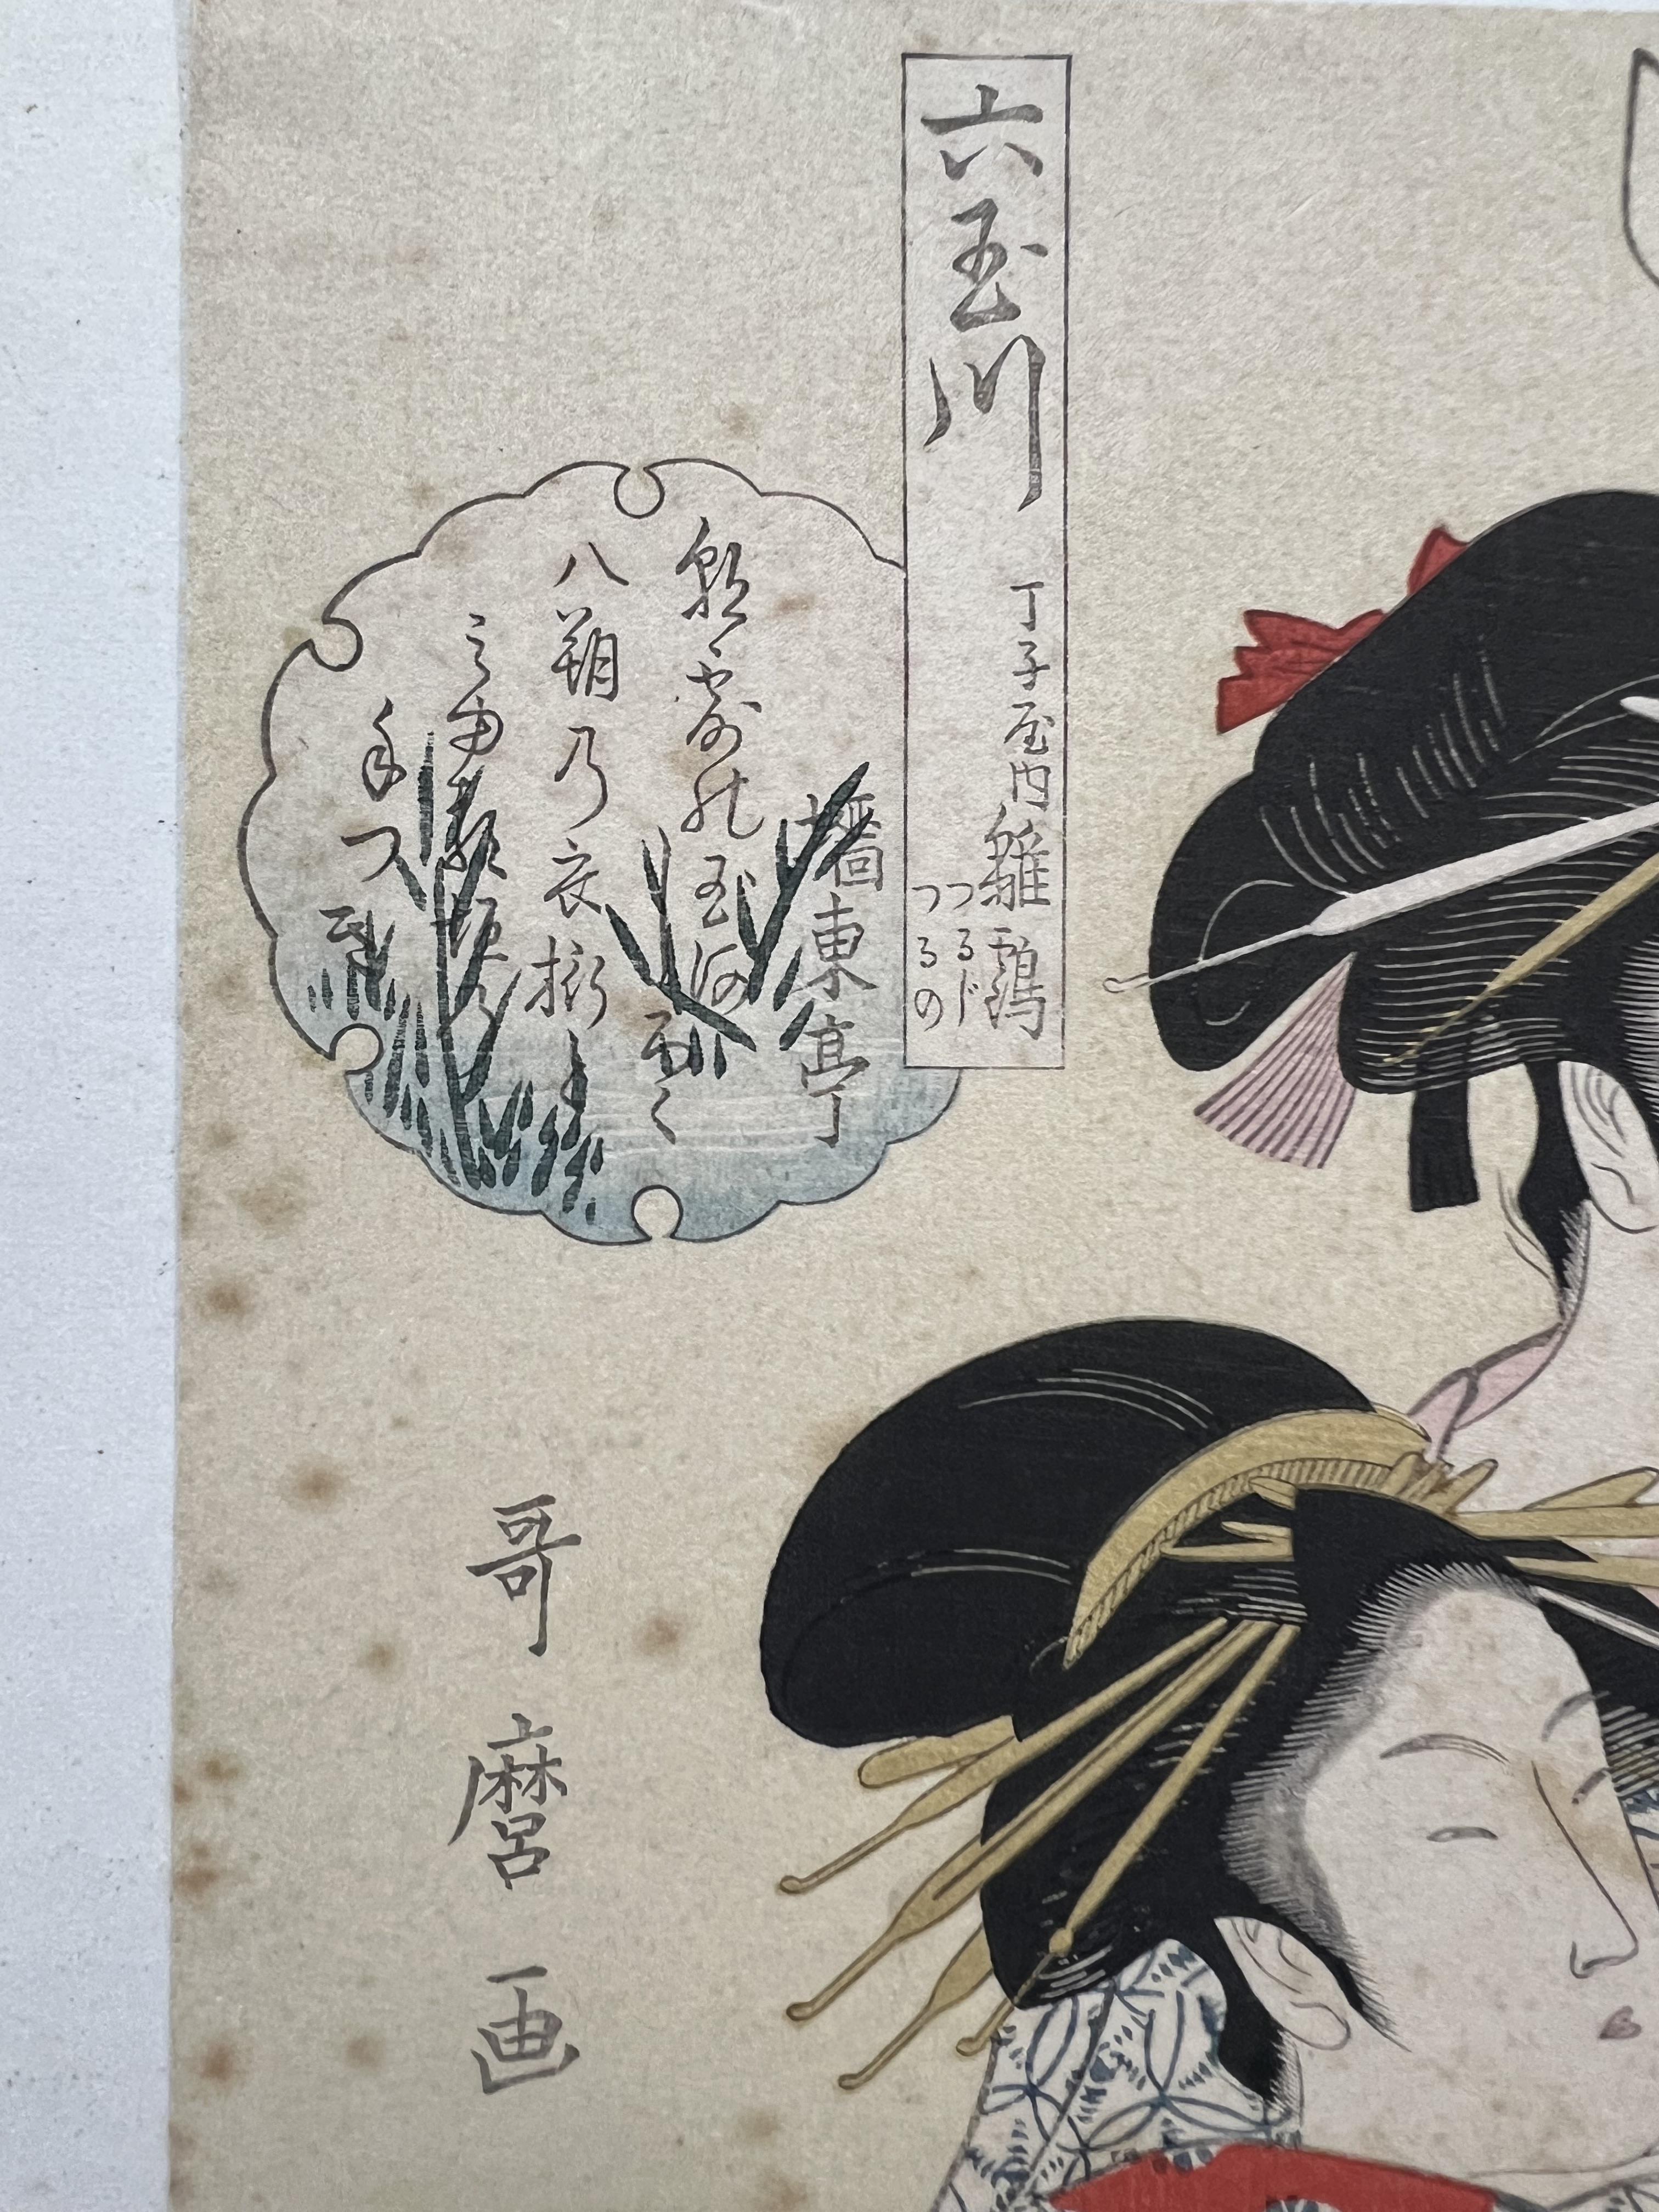 After Kitagawa Utamaro (1874-1808), an Edo period Japanese woodblock print with domestic figural - Image 2 of 2